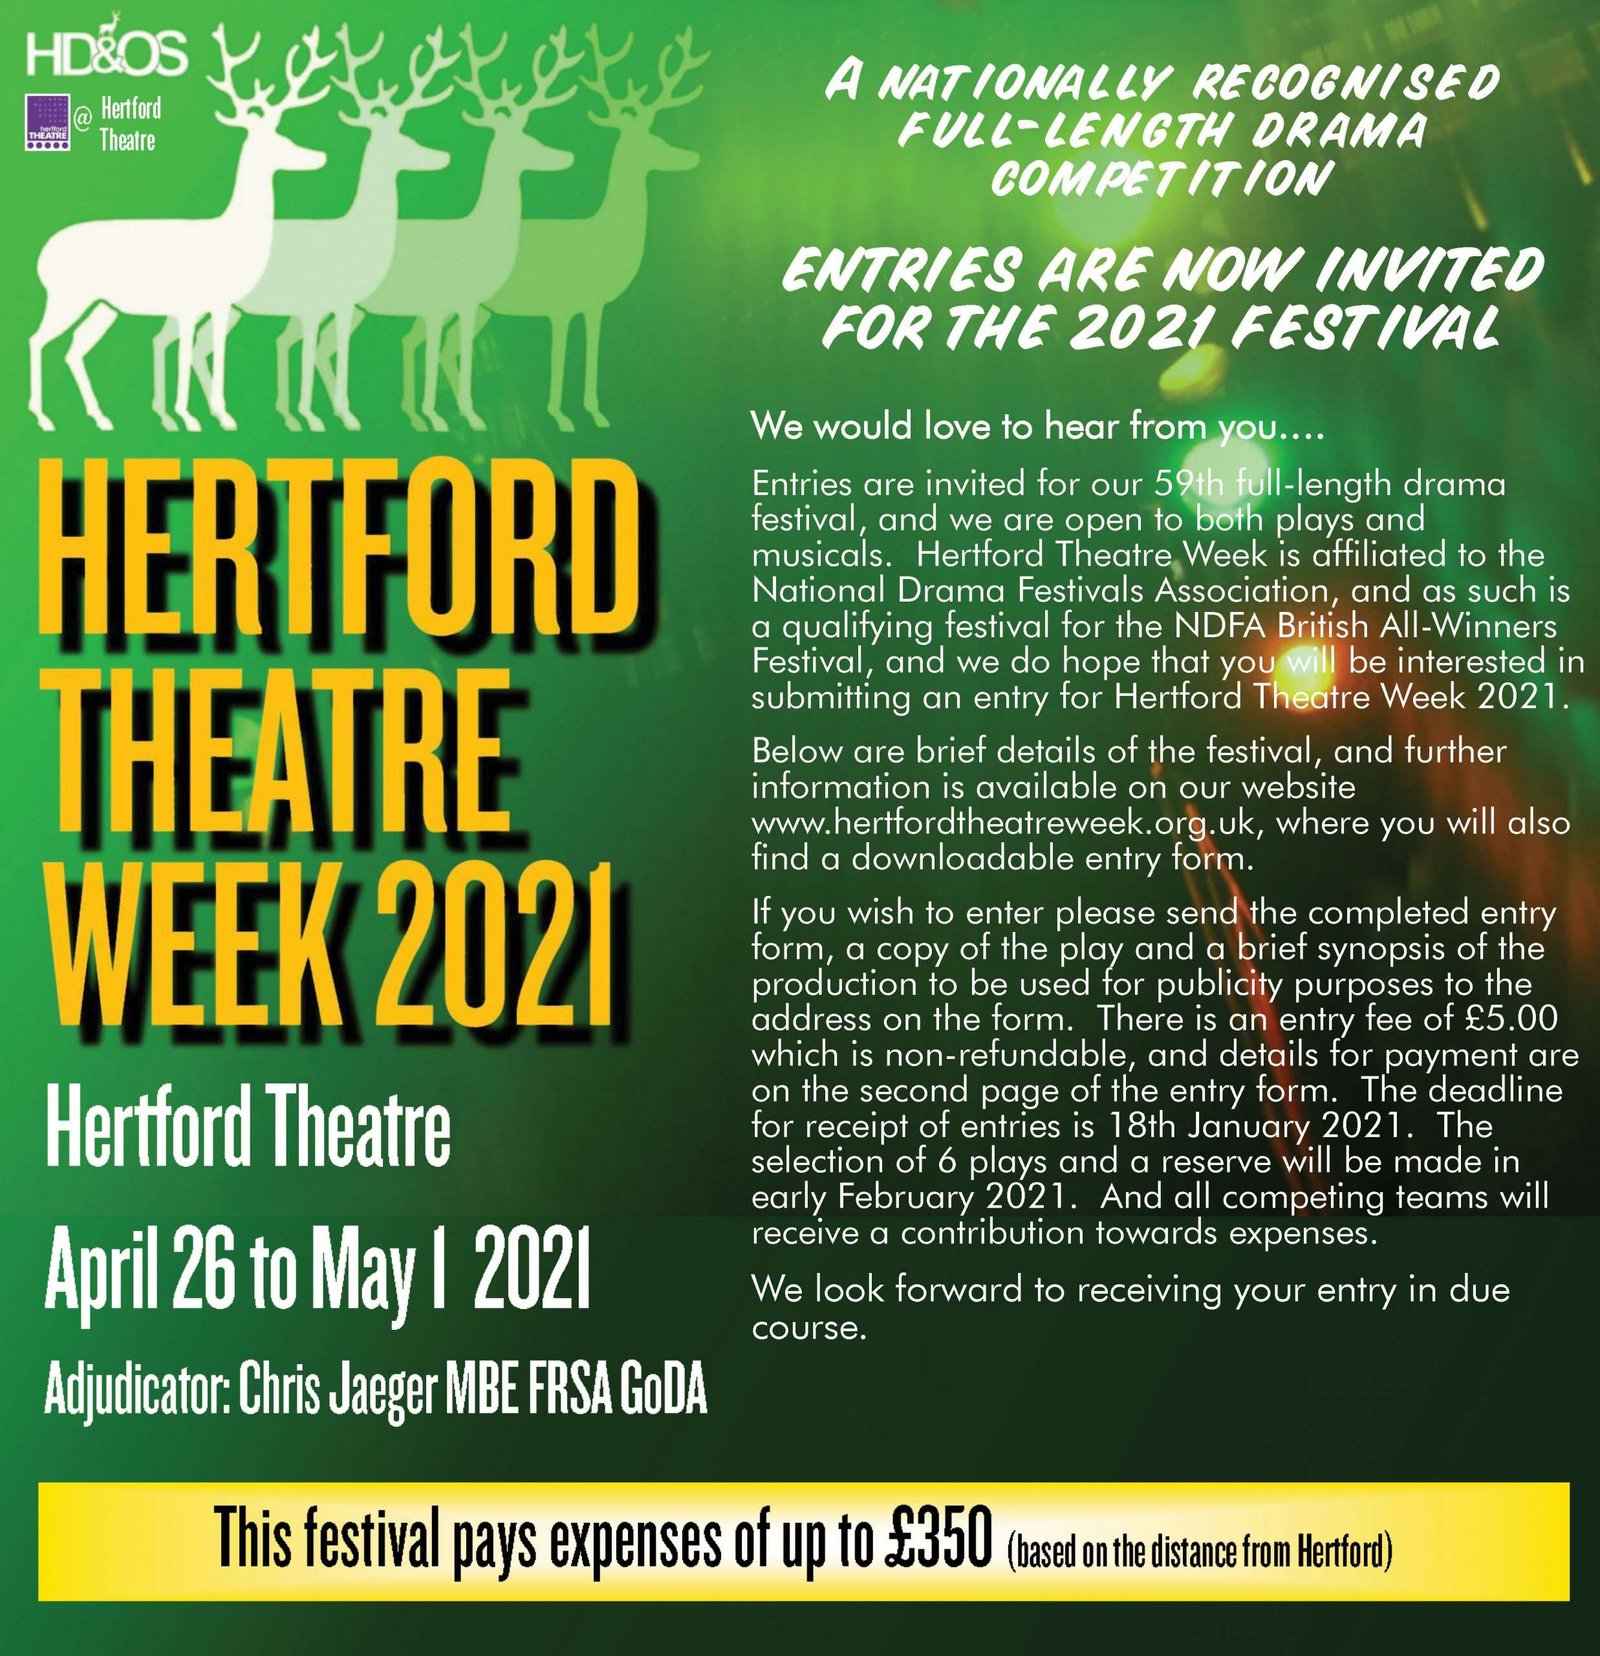 YOUR NEWS – Hertford Theatre Week 2021